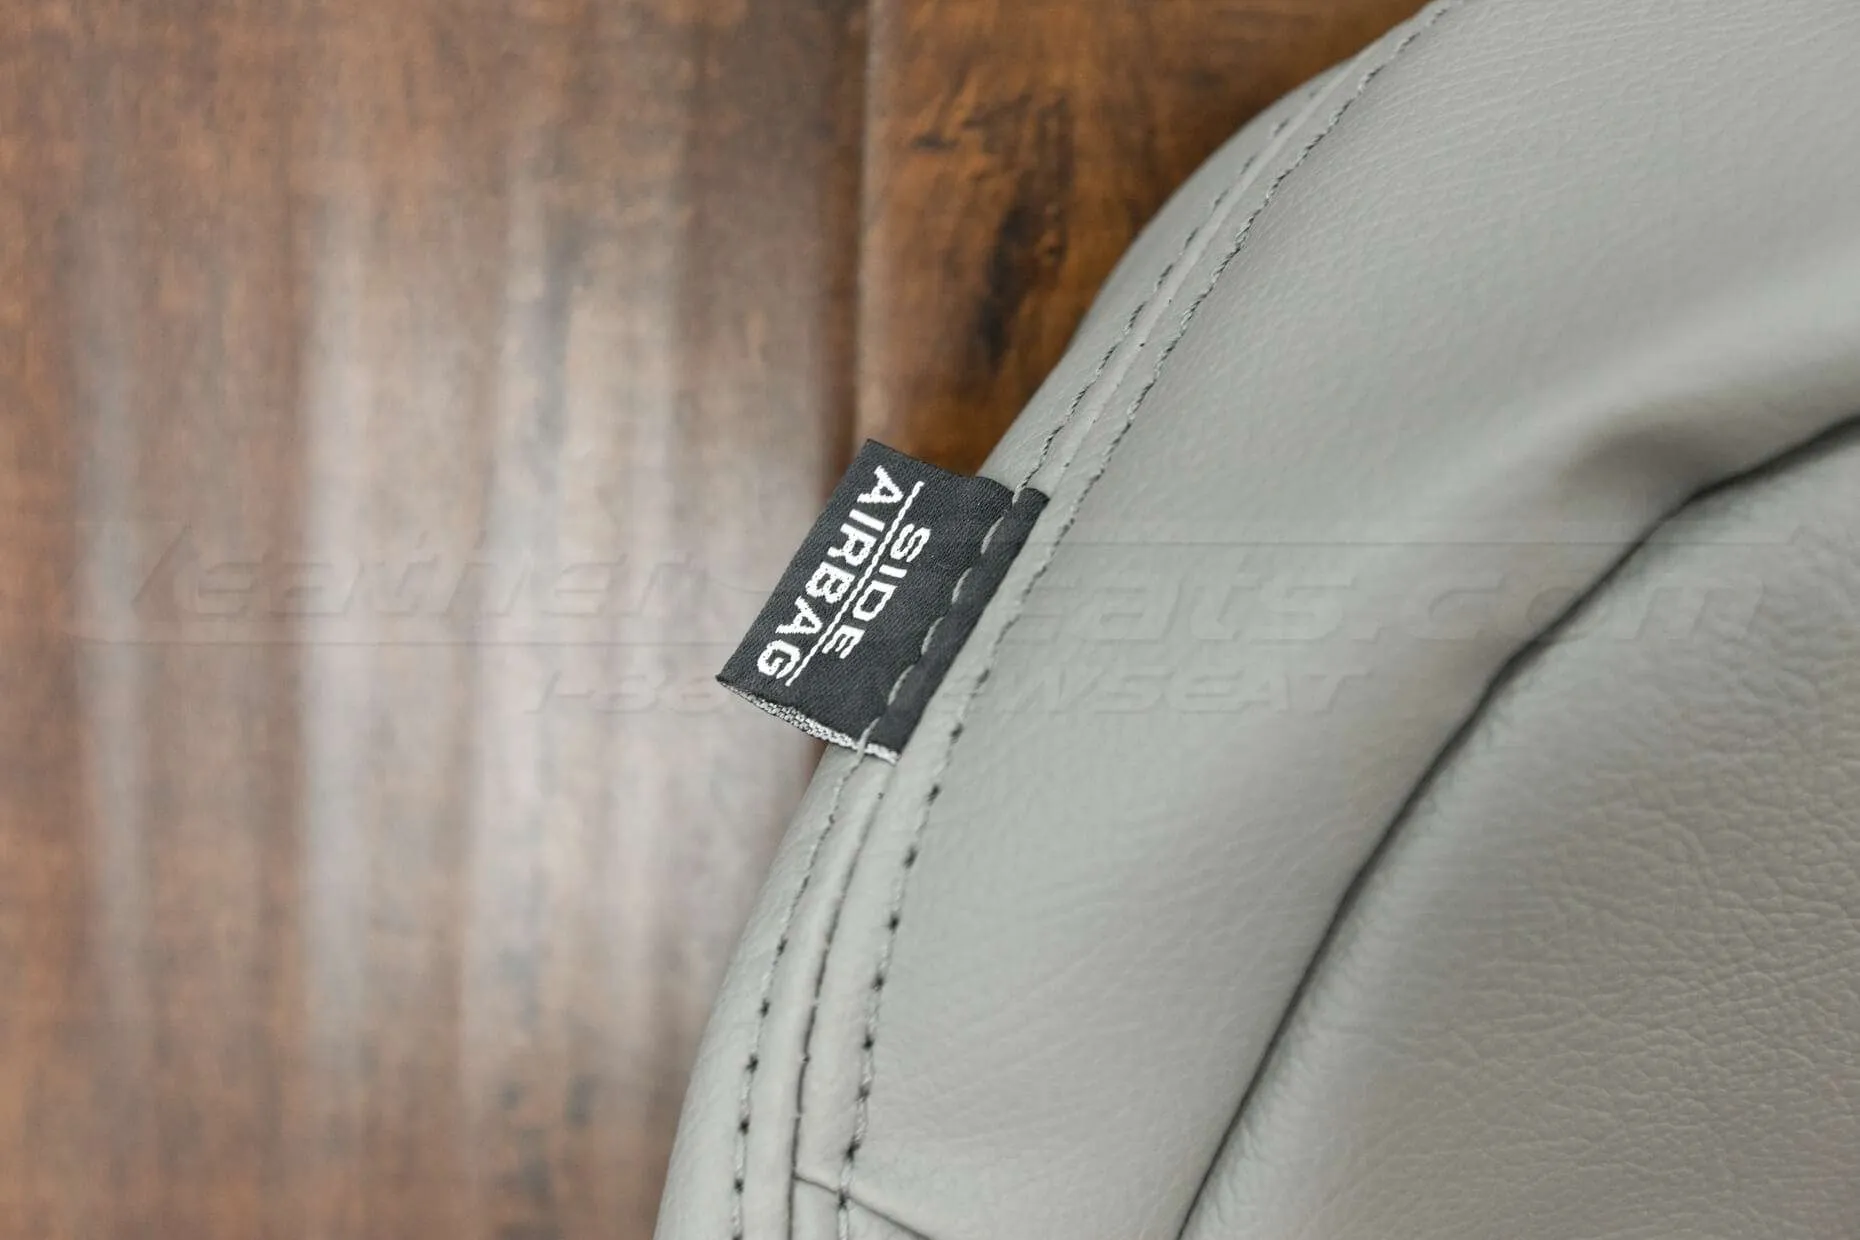 Airbag tag on backrest